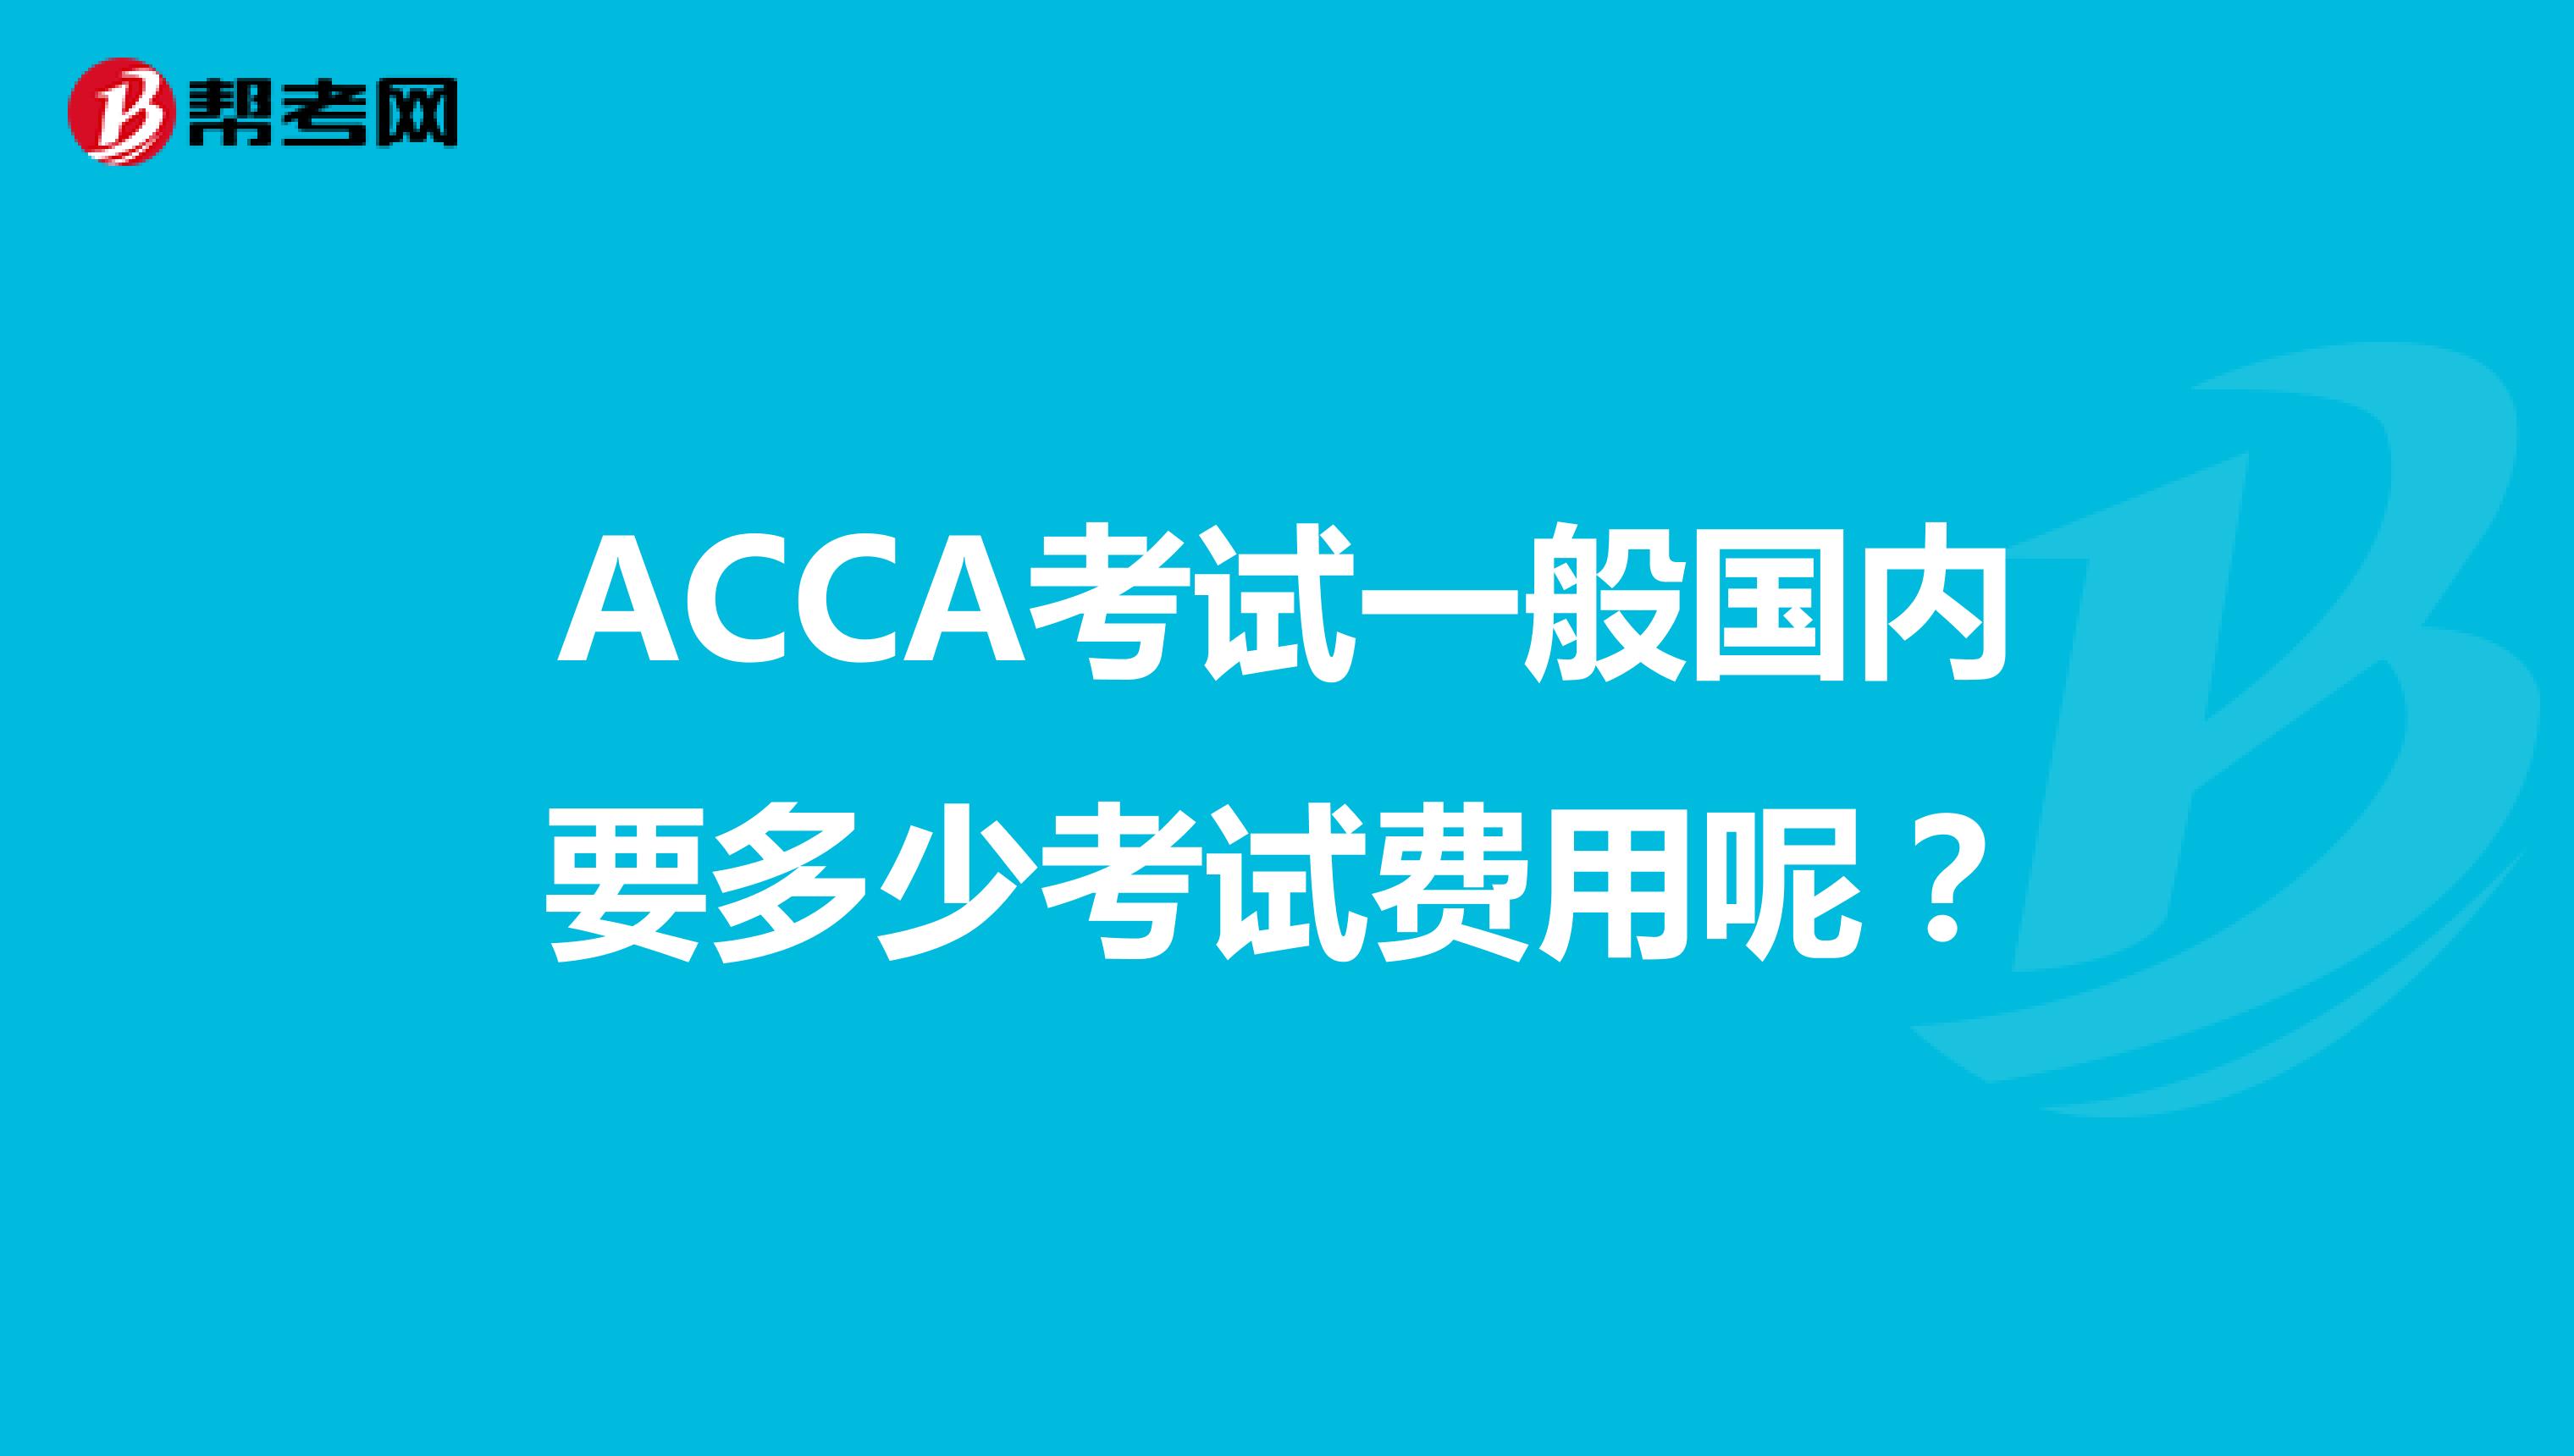 ACCA考试一般国内要多少考试费用呢？